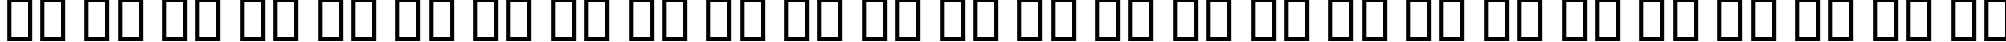 Пример написания английского алфавита шрифтом B Mah